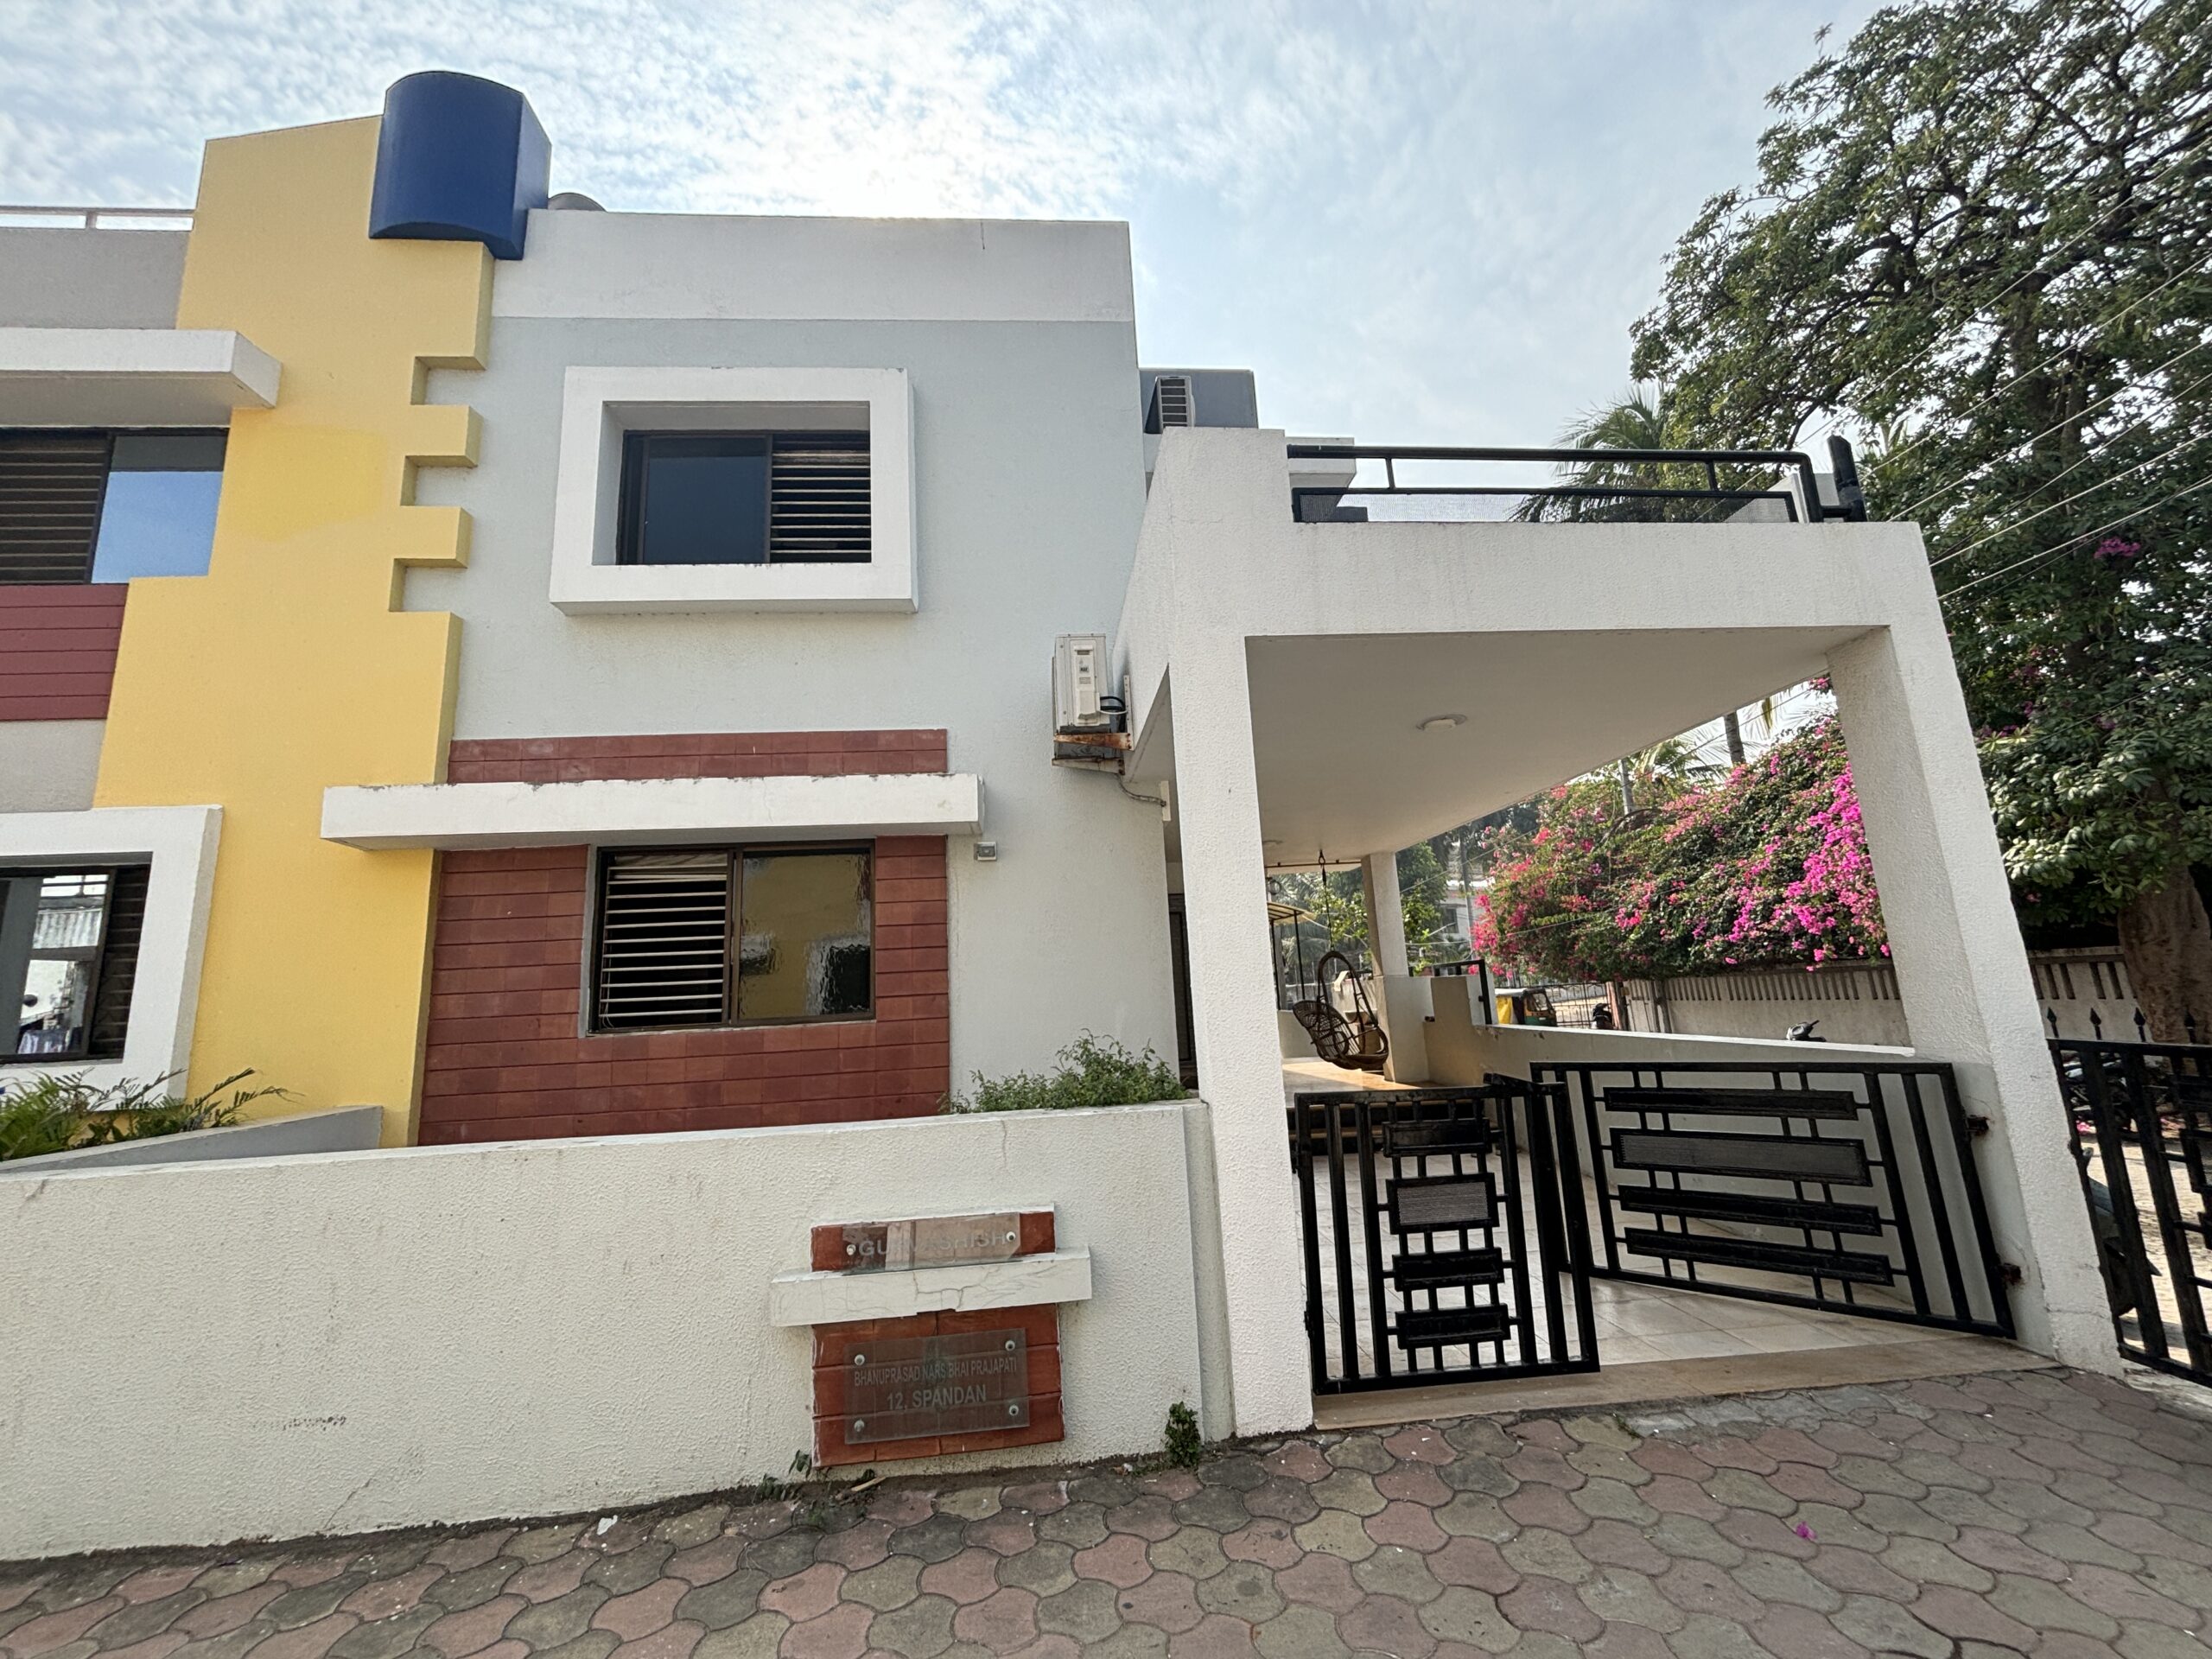 3 BHK Residential Independent House / Villa for Sale in Vidhyanagar – karamsad road